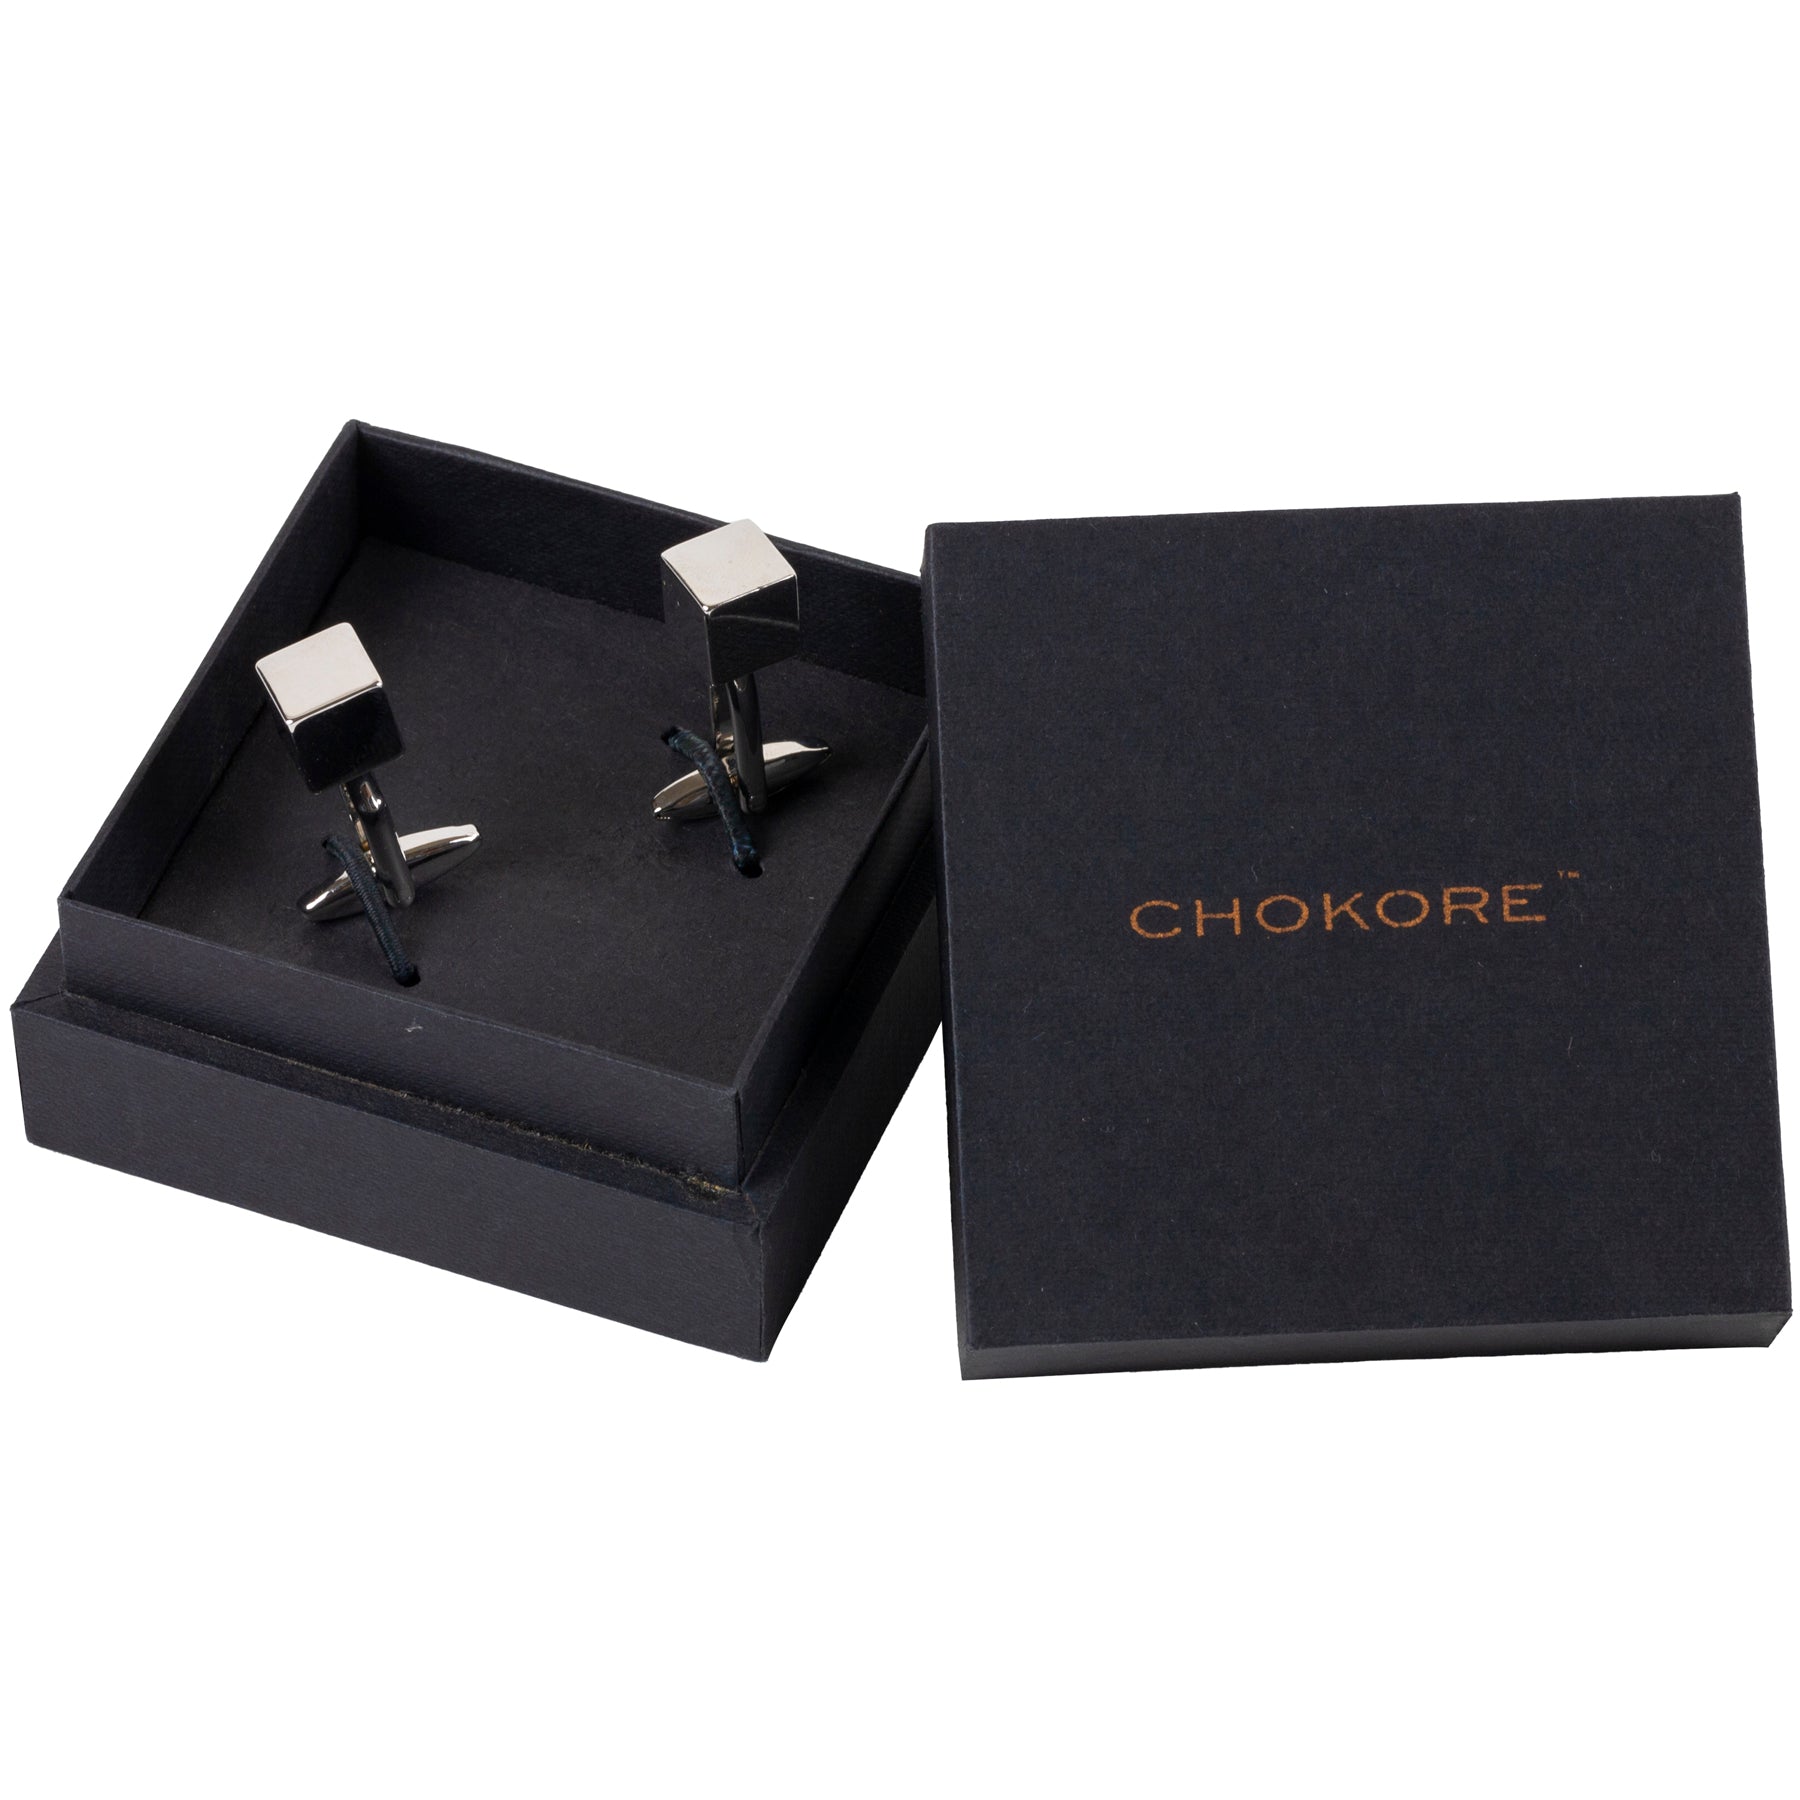 Chokore Silver Square Premium Range of Cufflinks